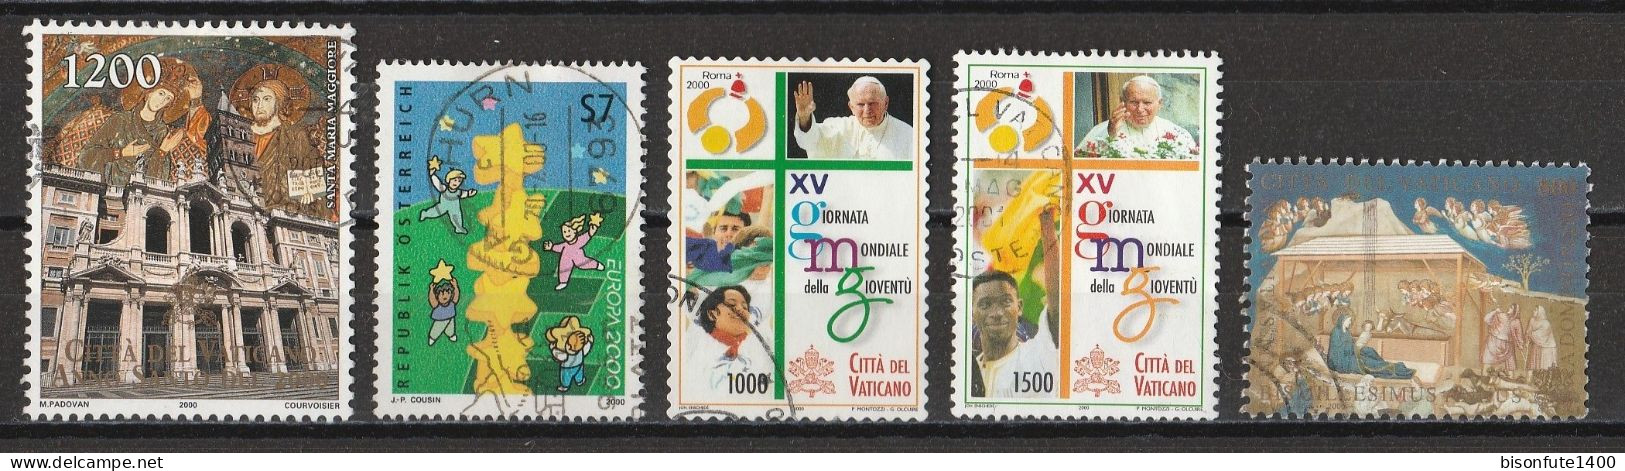 Vatican 2000 : Timbres Yvert & Tellier N° 1183 - 1196 - 1199 - 1201 - 1209 - 1210 - 1211 - 1212 Et 1216 Oblitérés - Usati